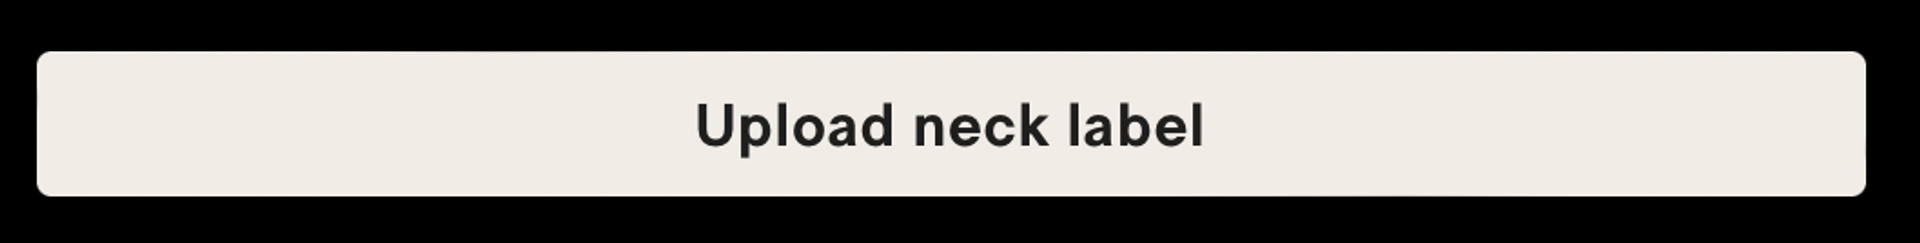 upload neck label button